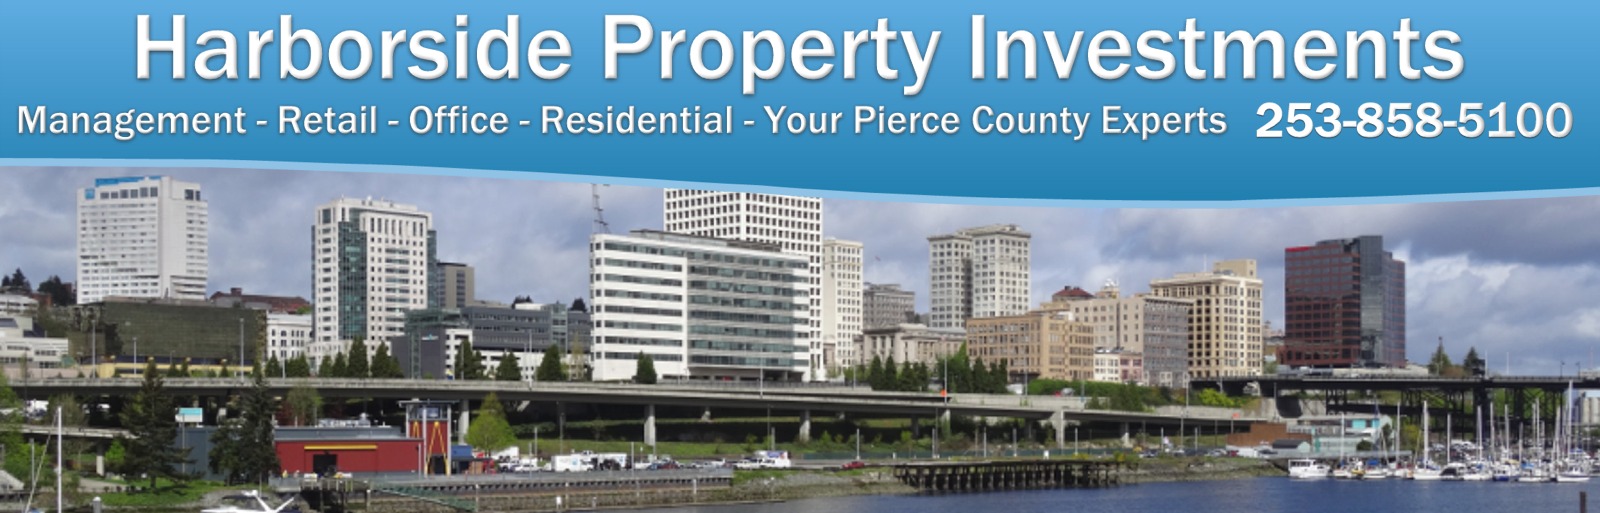 Harborside Property Management - Tacoma & Gig Harbor Commercial Property Investments